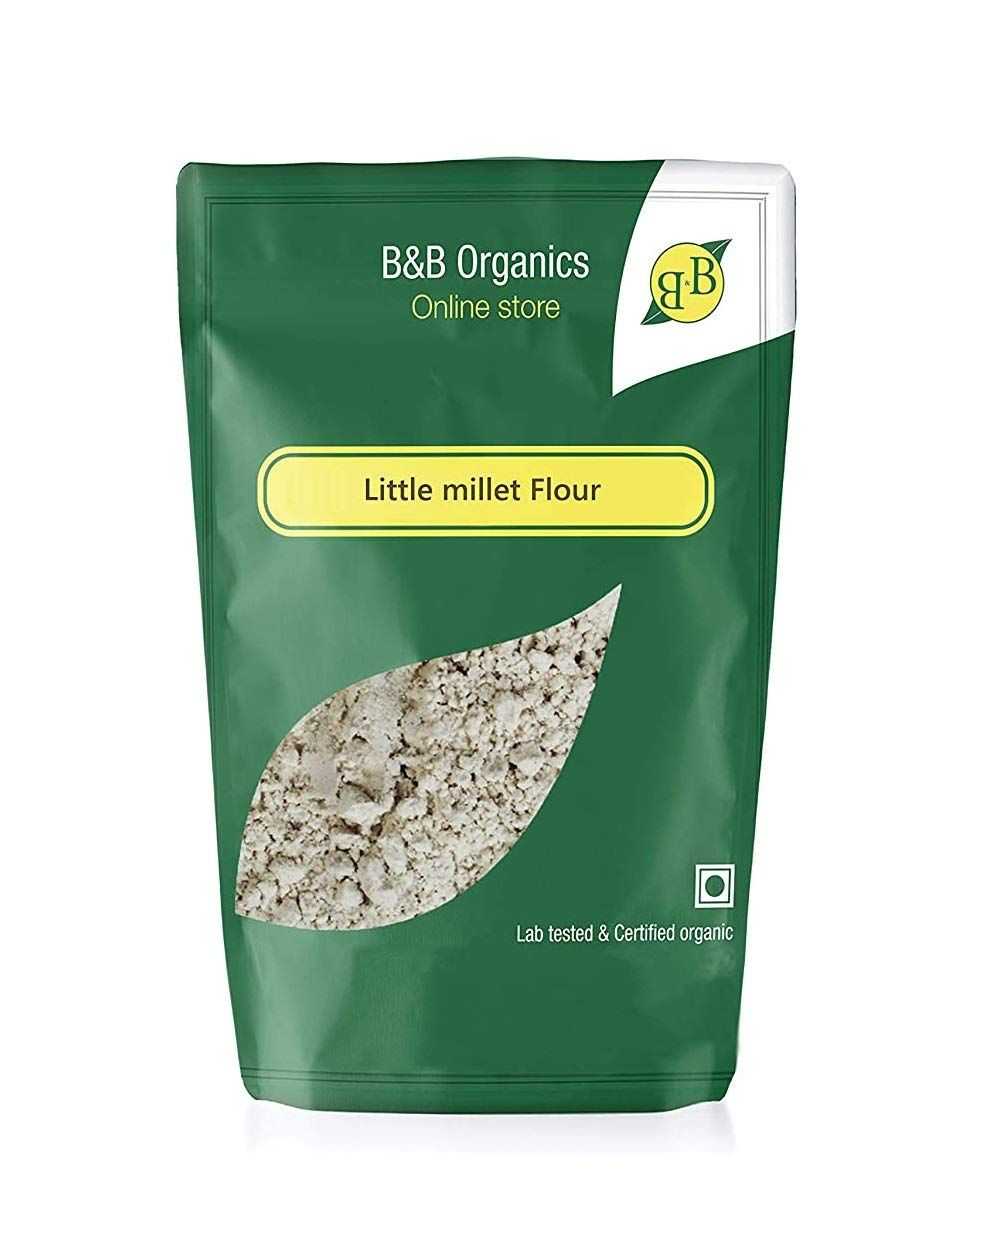 B&B Organics Little Millet Flour Image